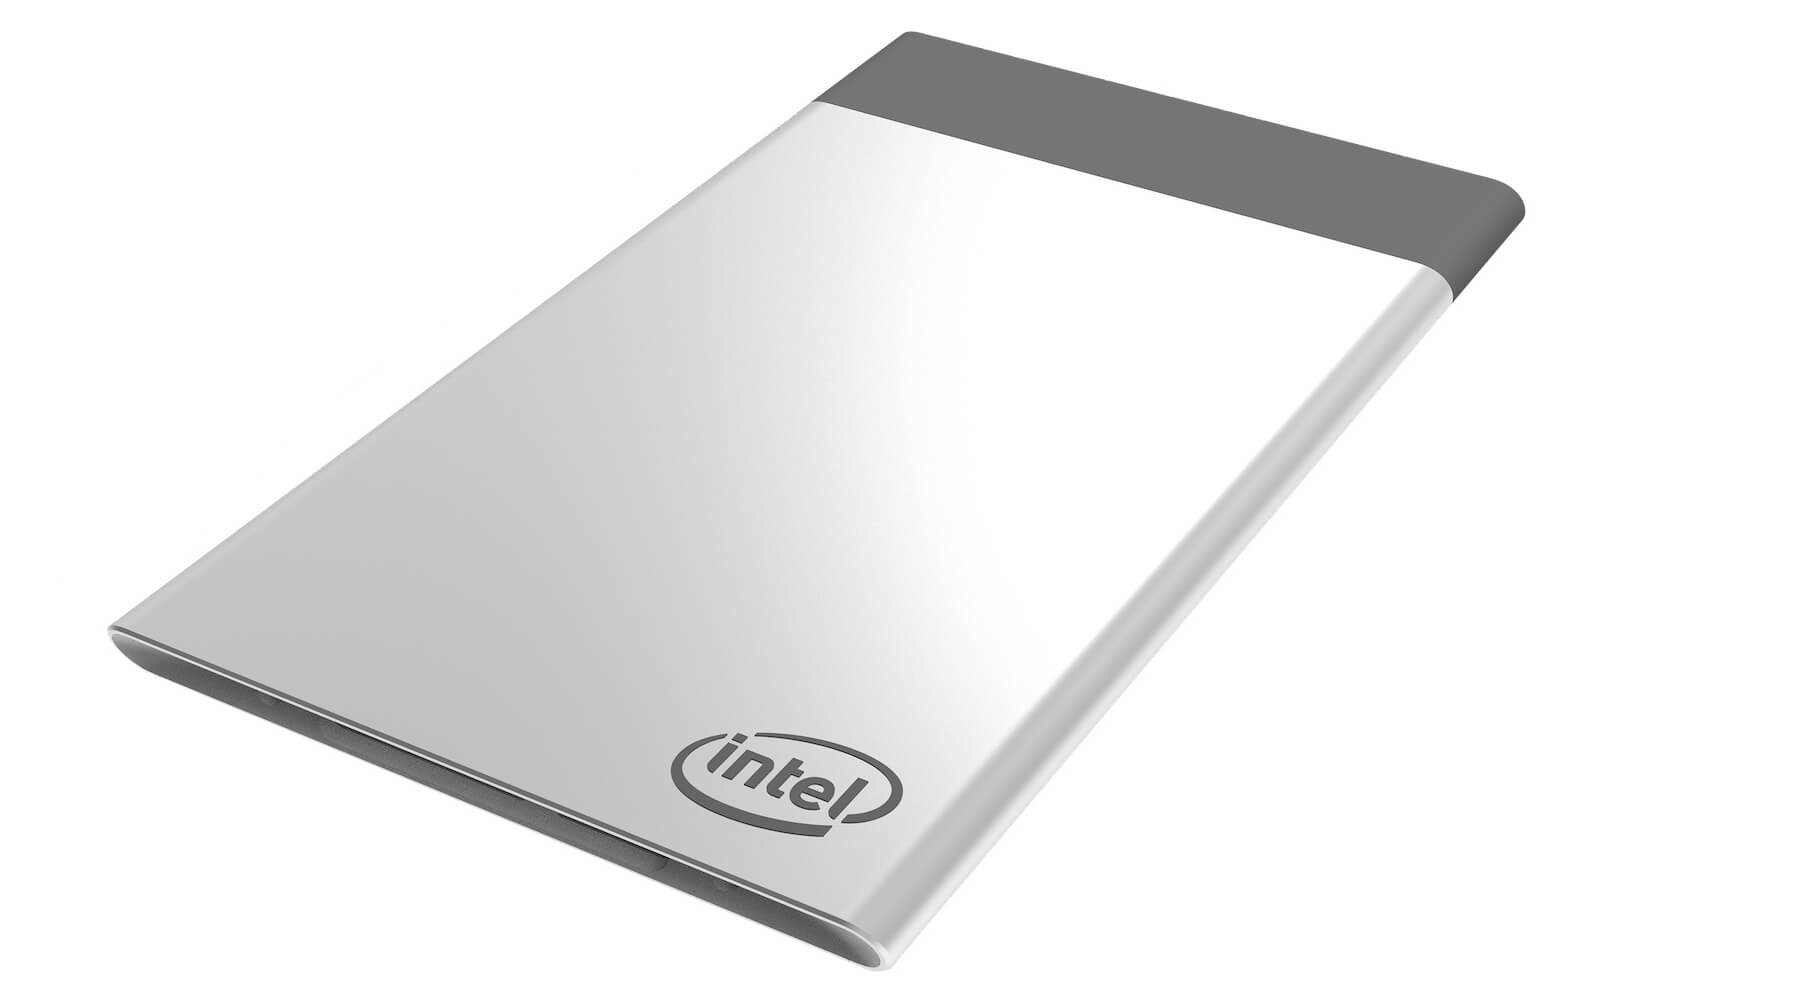 Intel Compute Cards